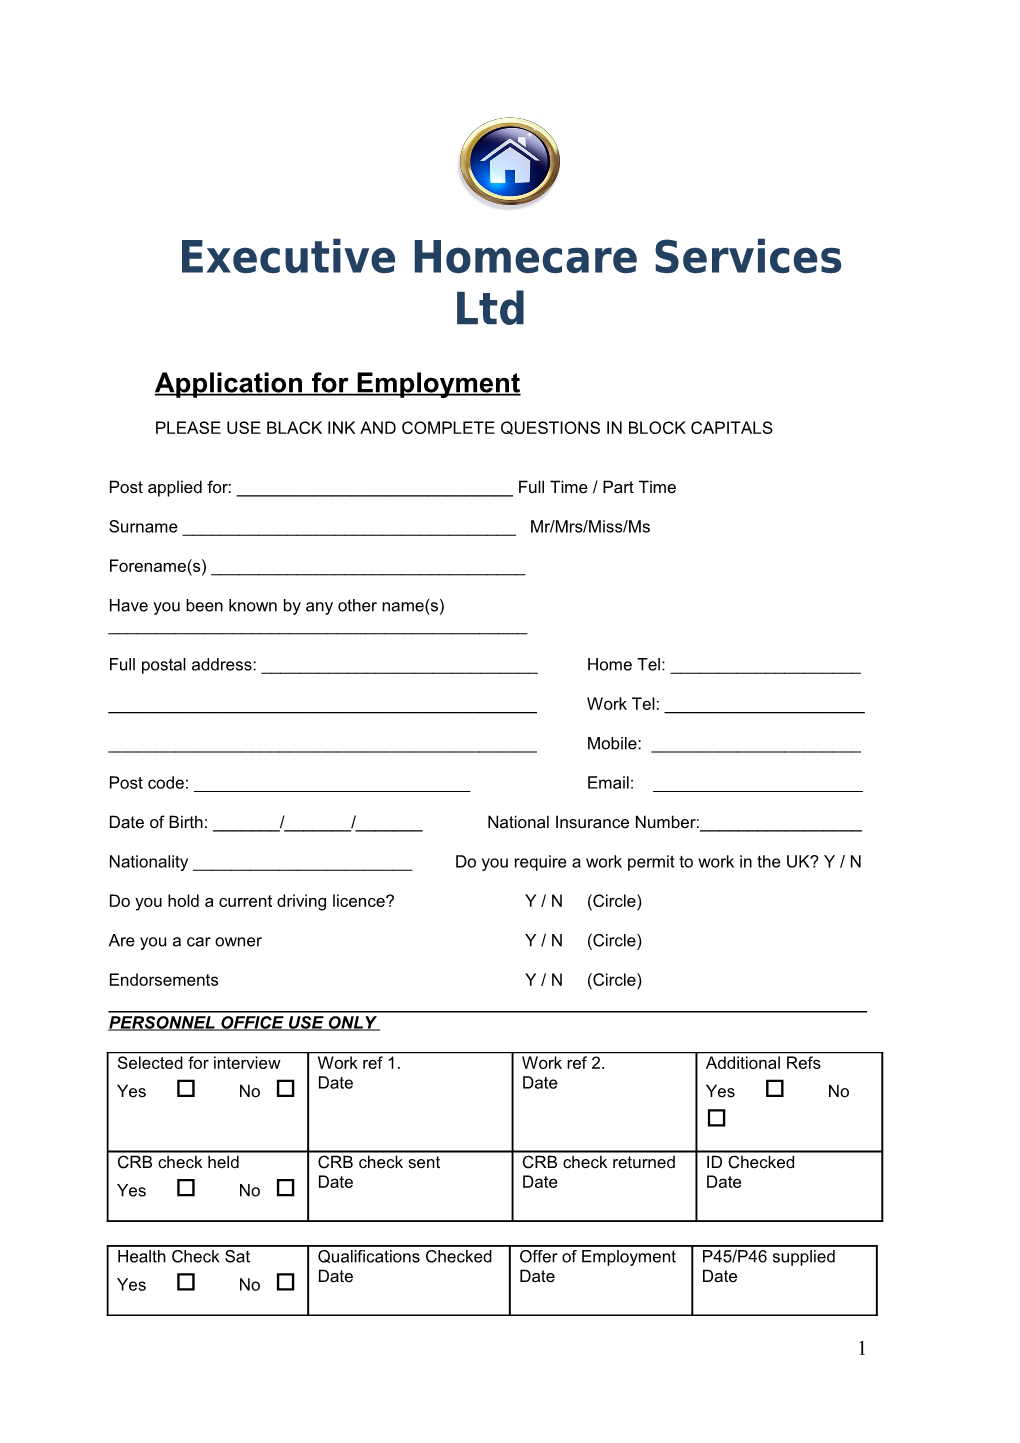 Executive Homecare Services Ltd